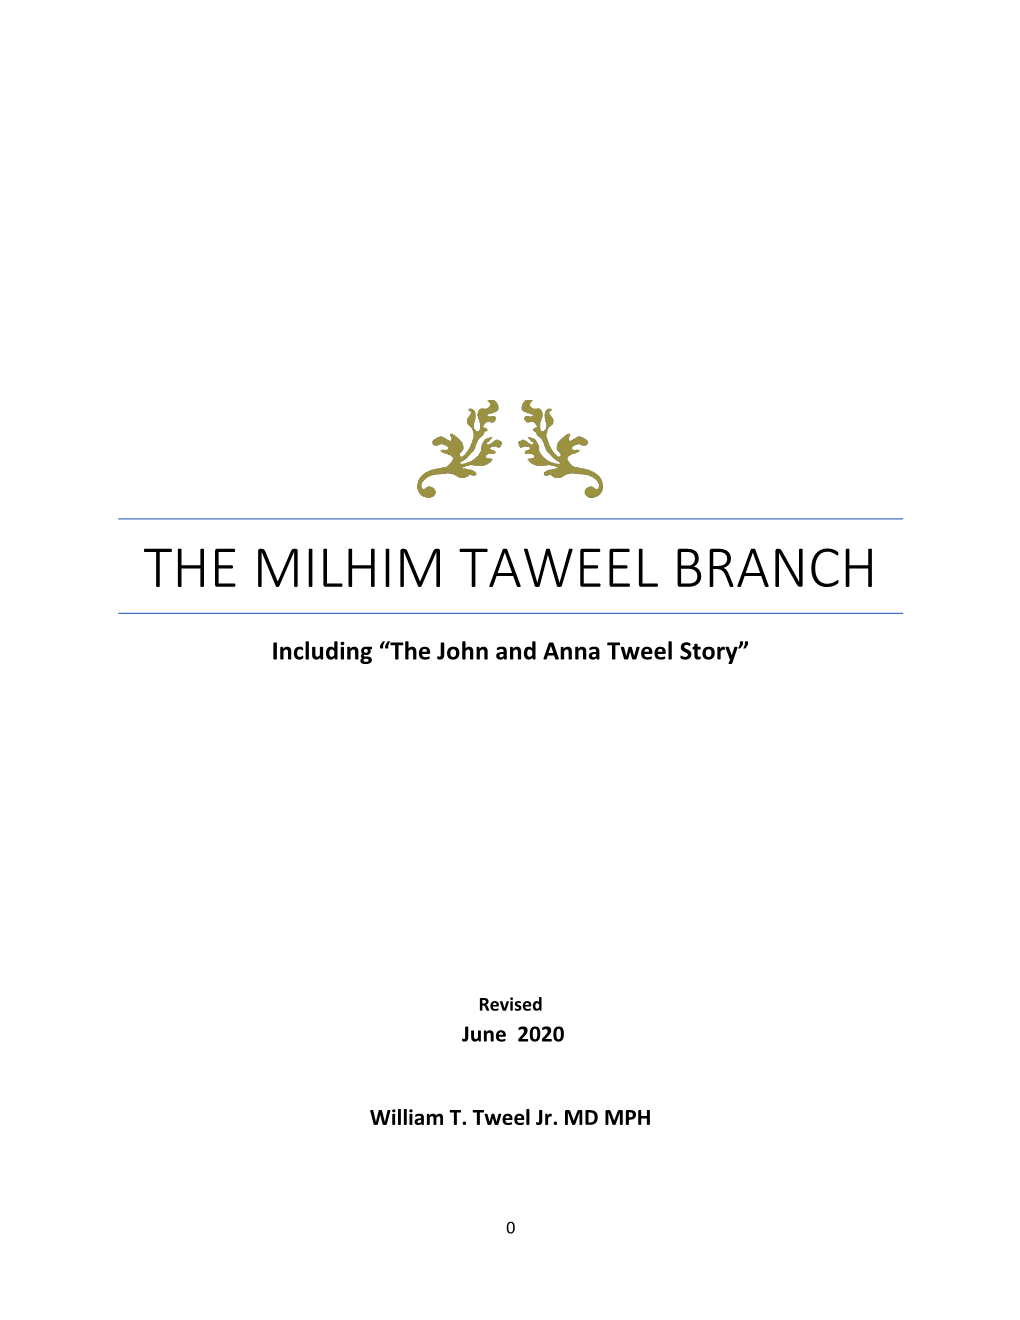 The Milhim Taweel Branch